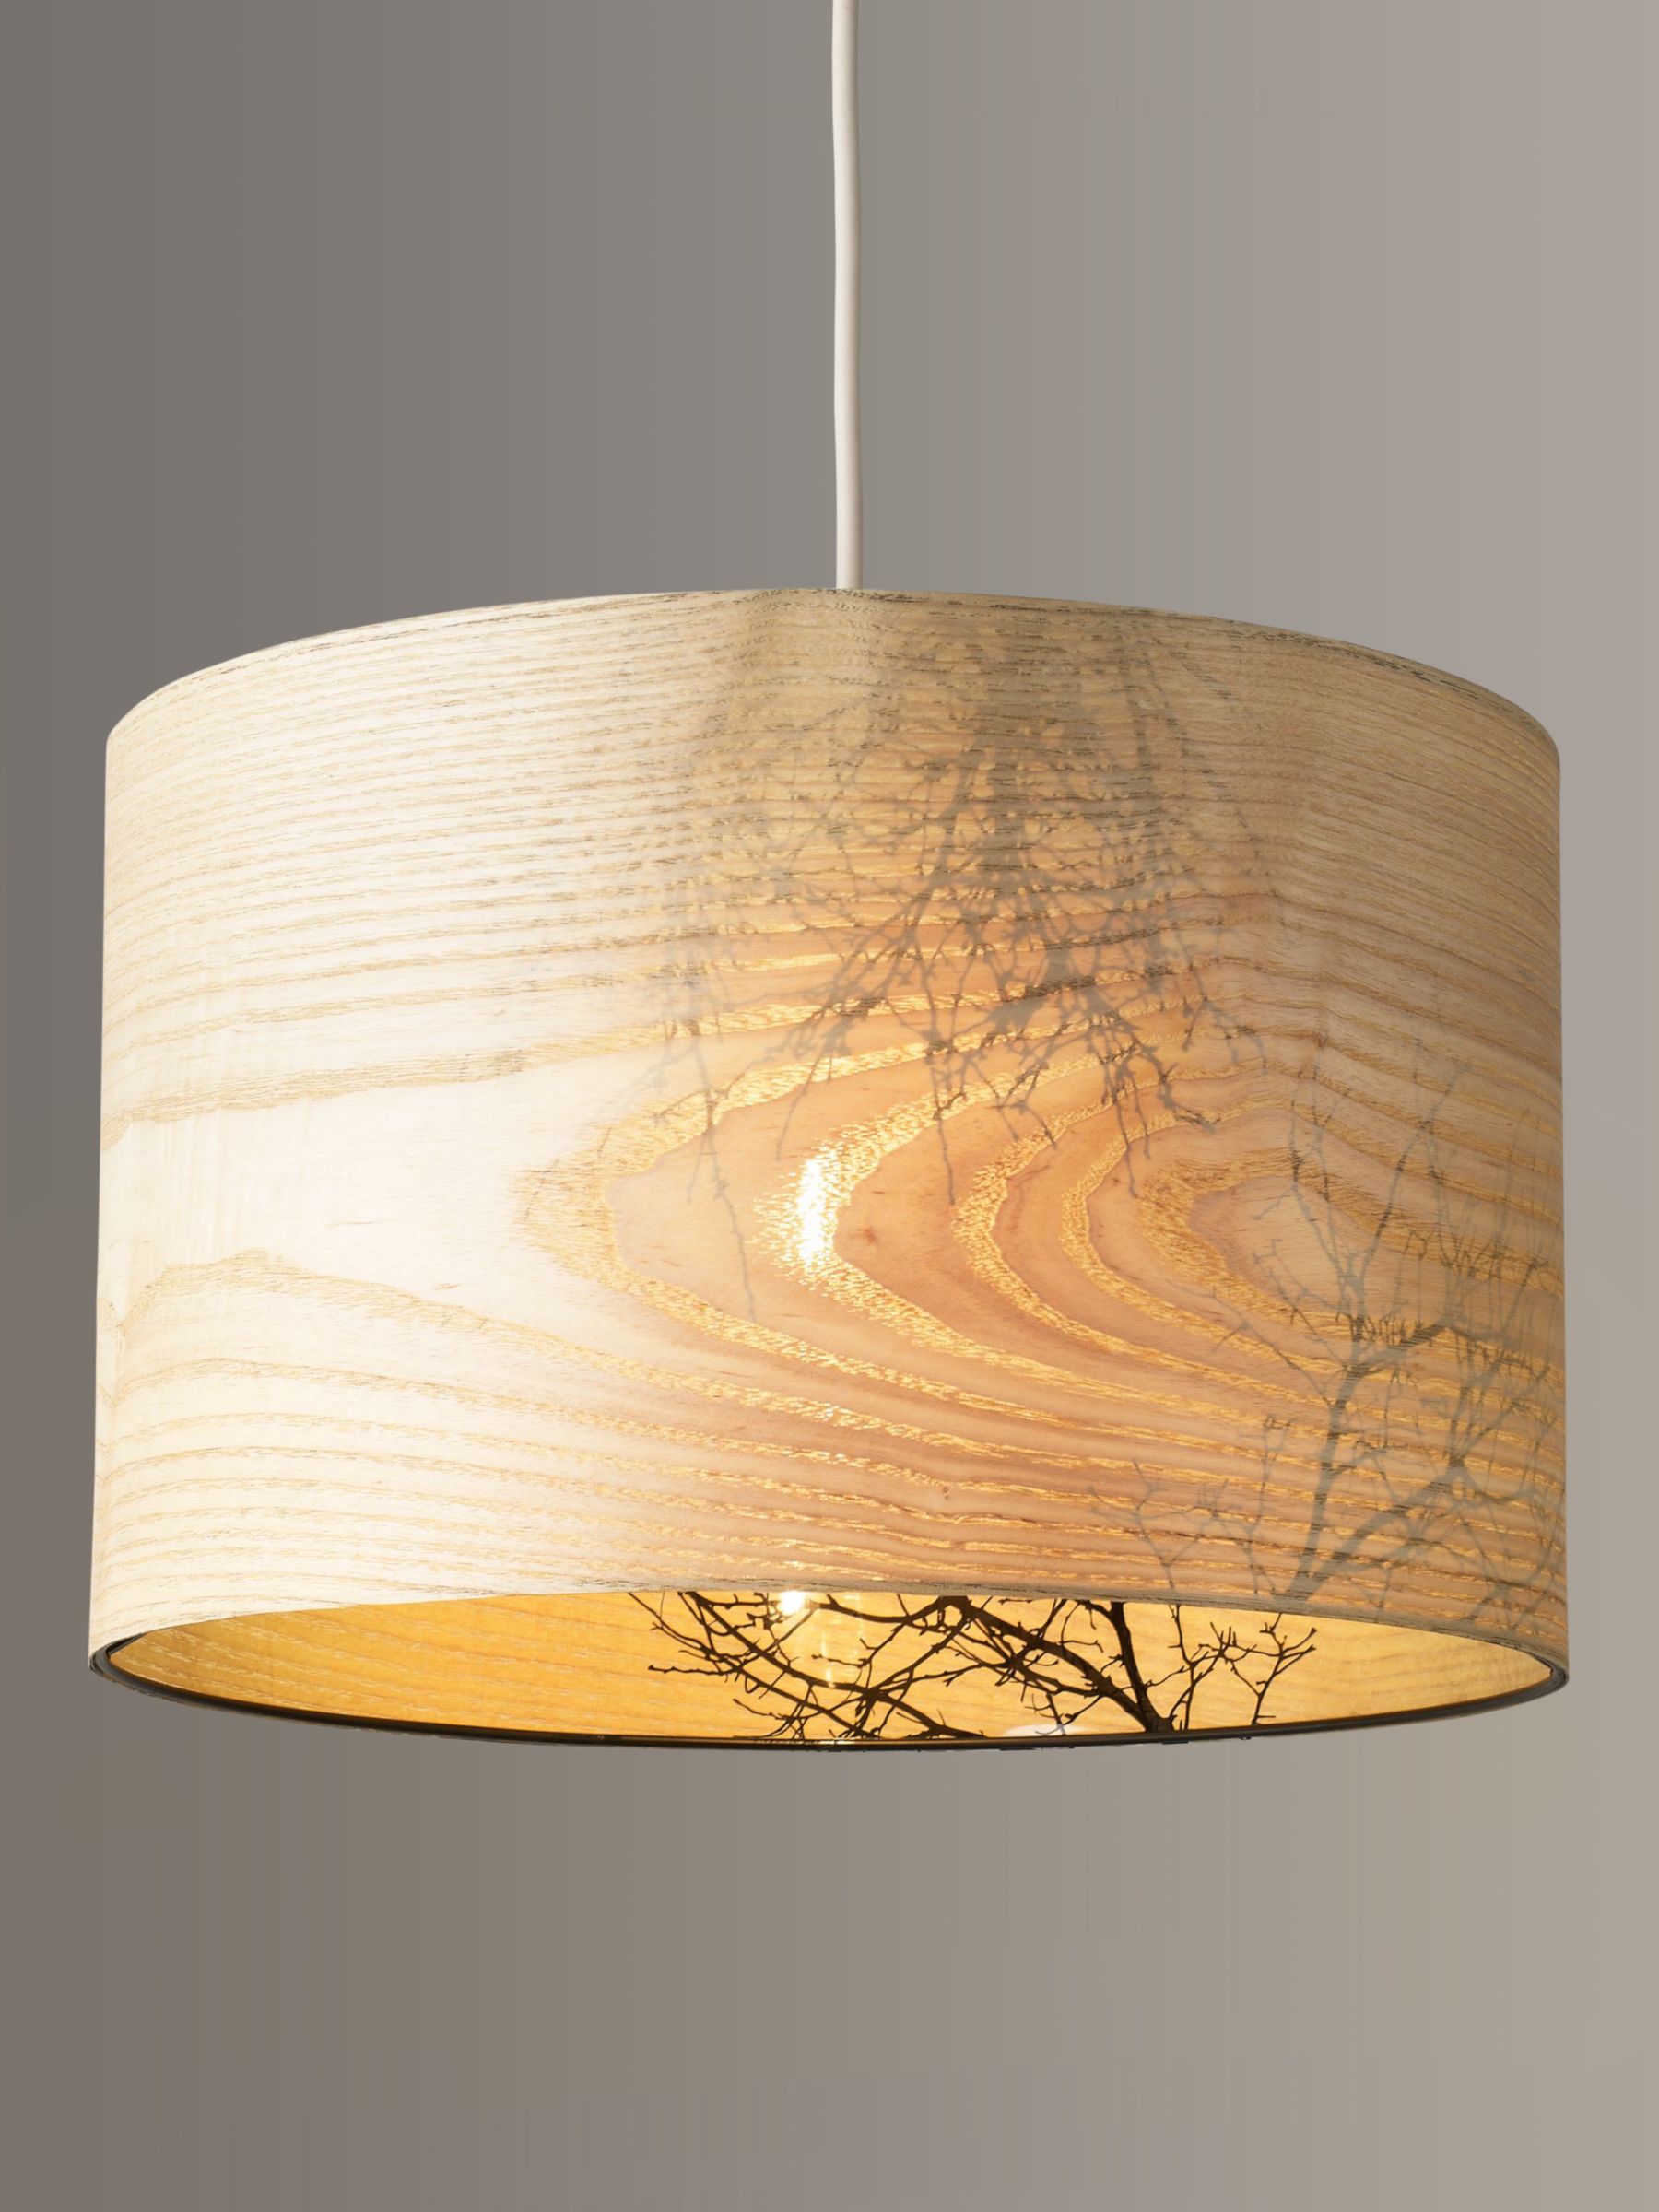 Wood Ceiling Lamp Shades John Lewis